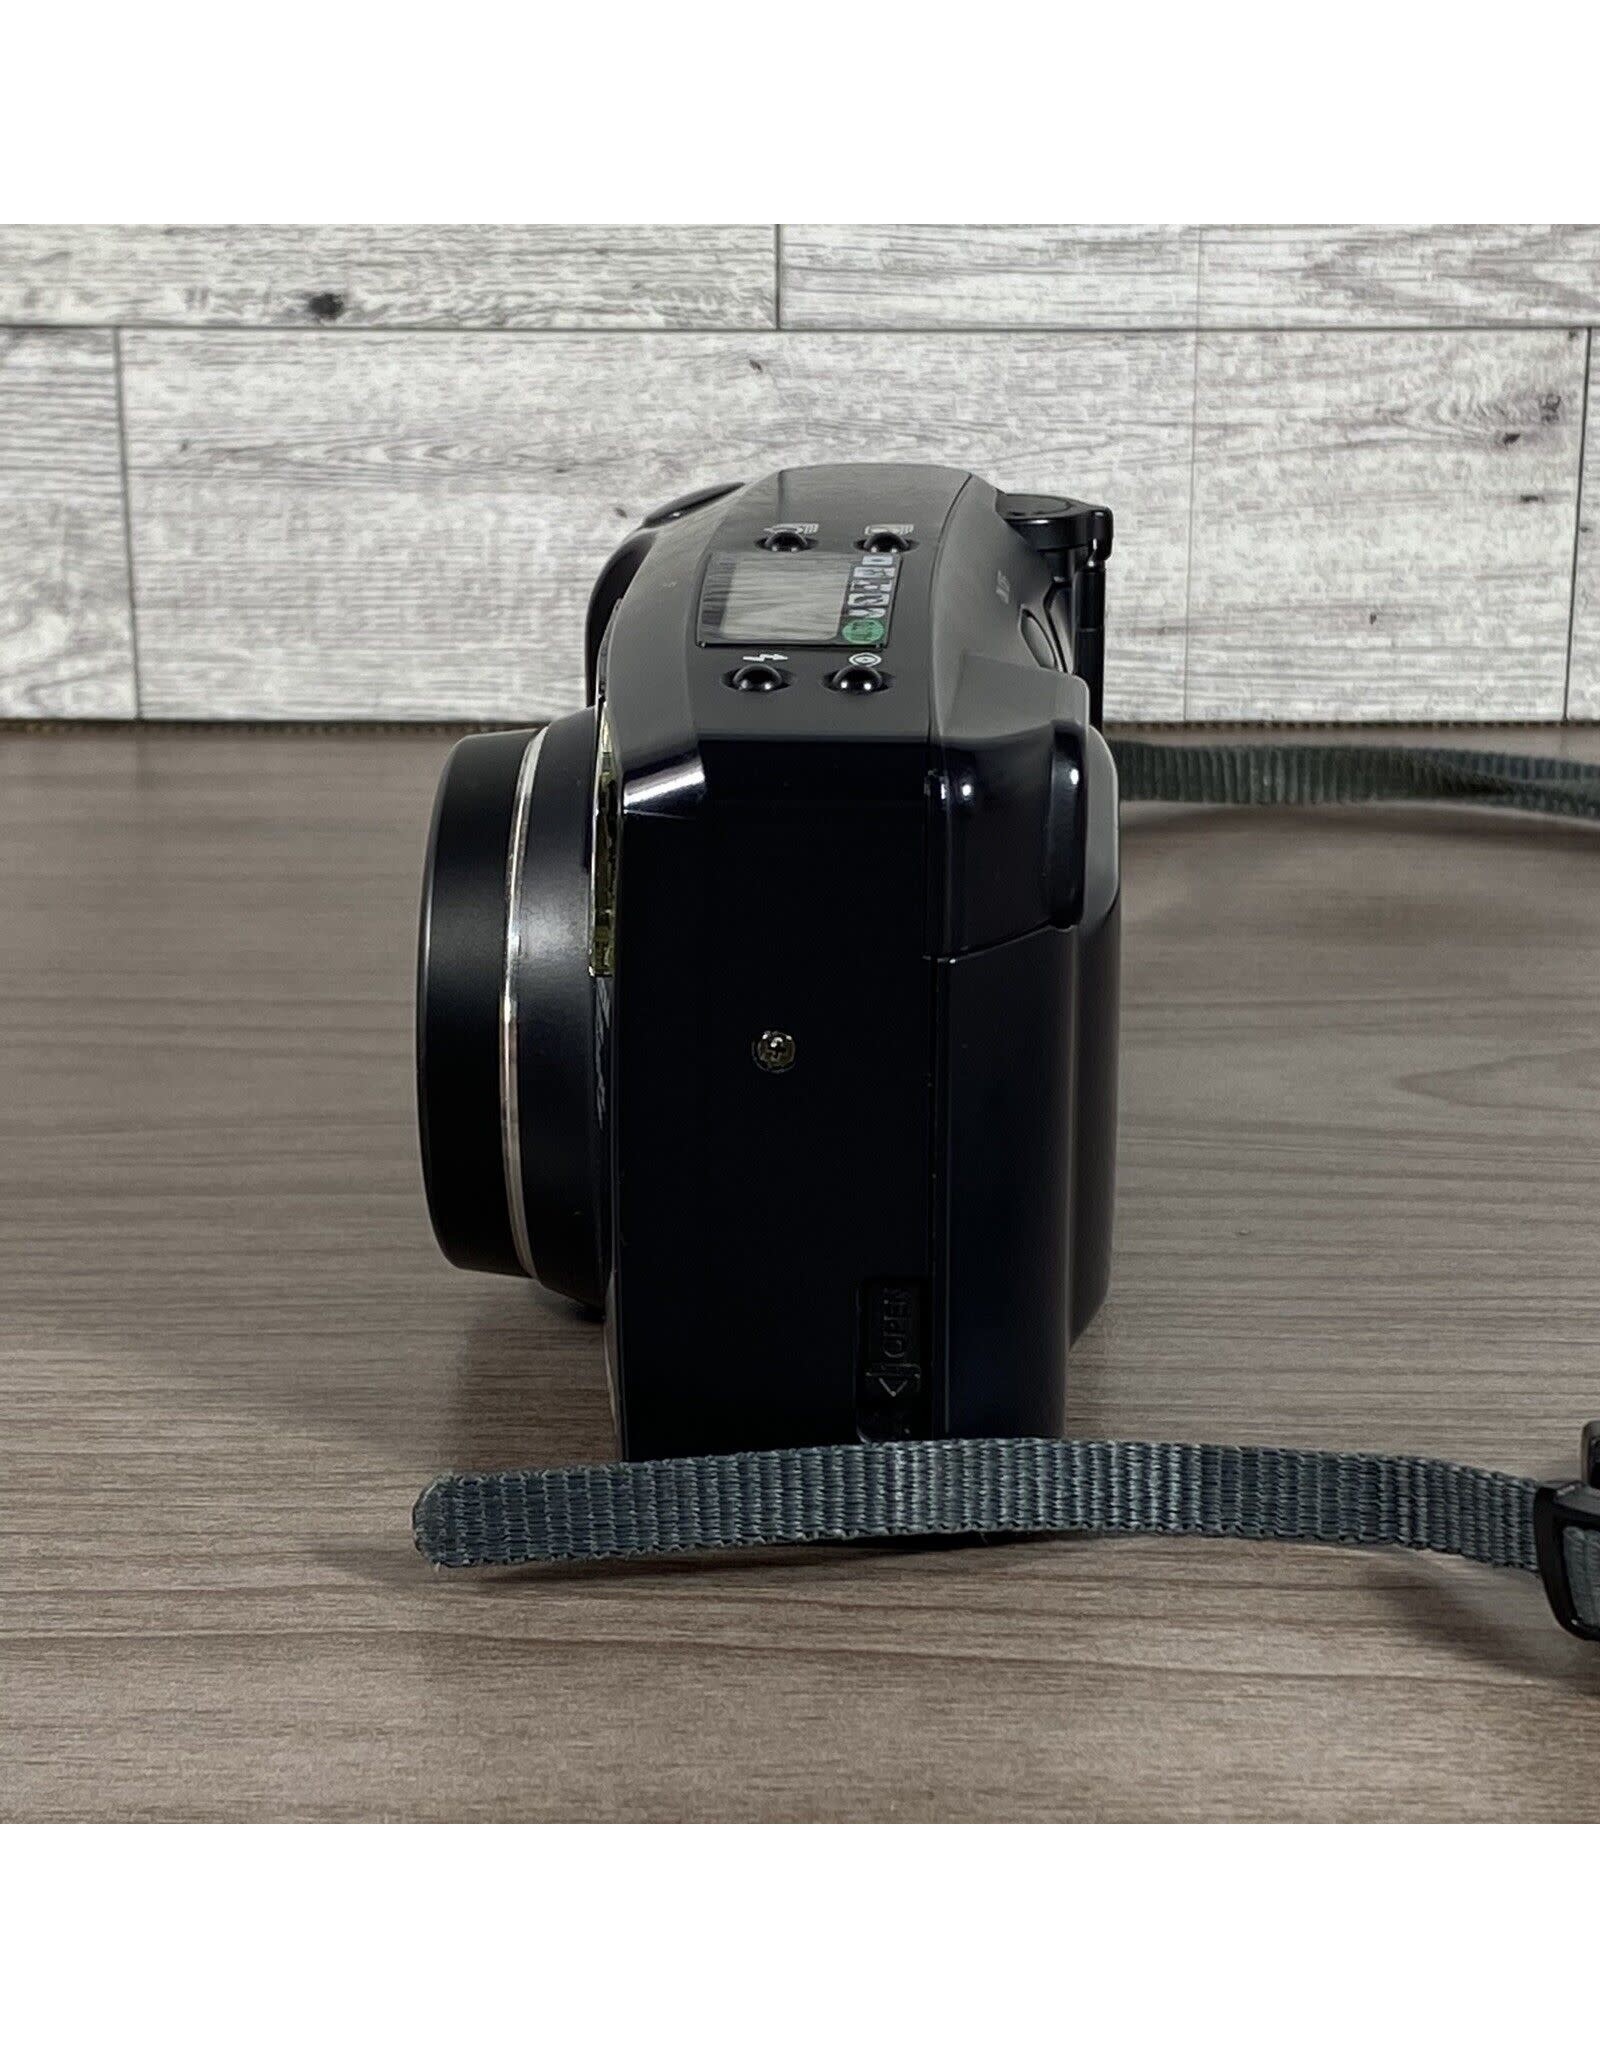 Konica Minolta Minolta Freedom Zoom 135 EX Date 35mm Point & Shoot Film Camera Black Tested (Pre-owned)